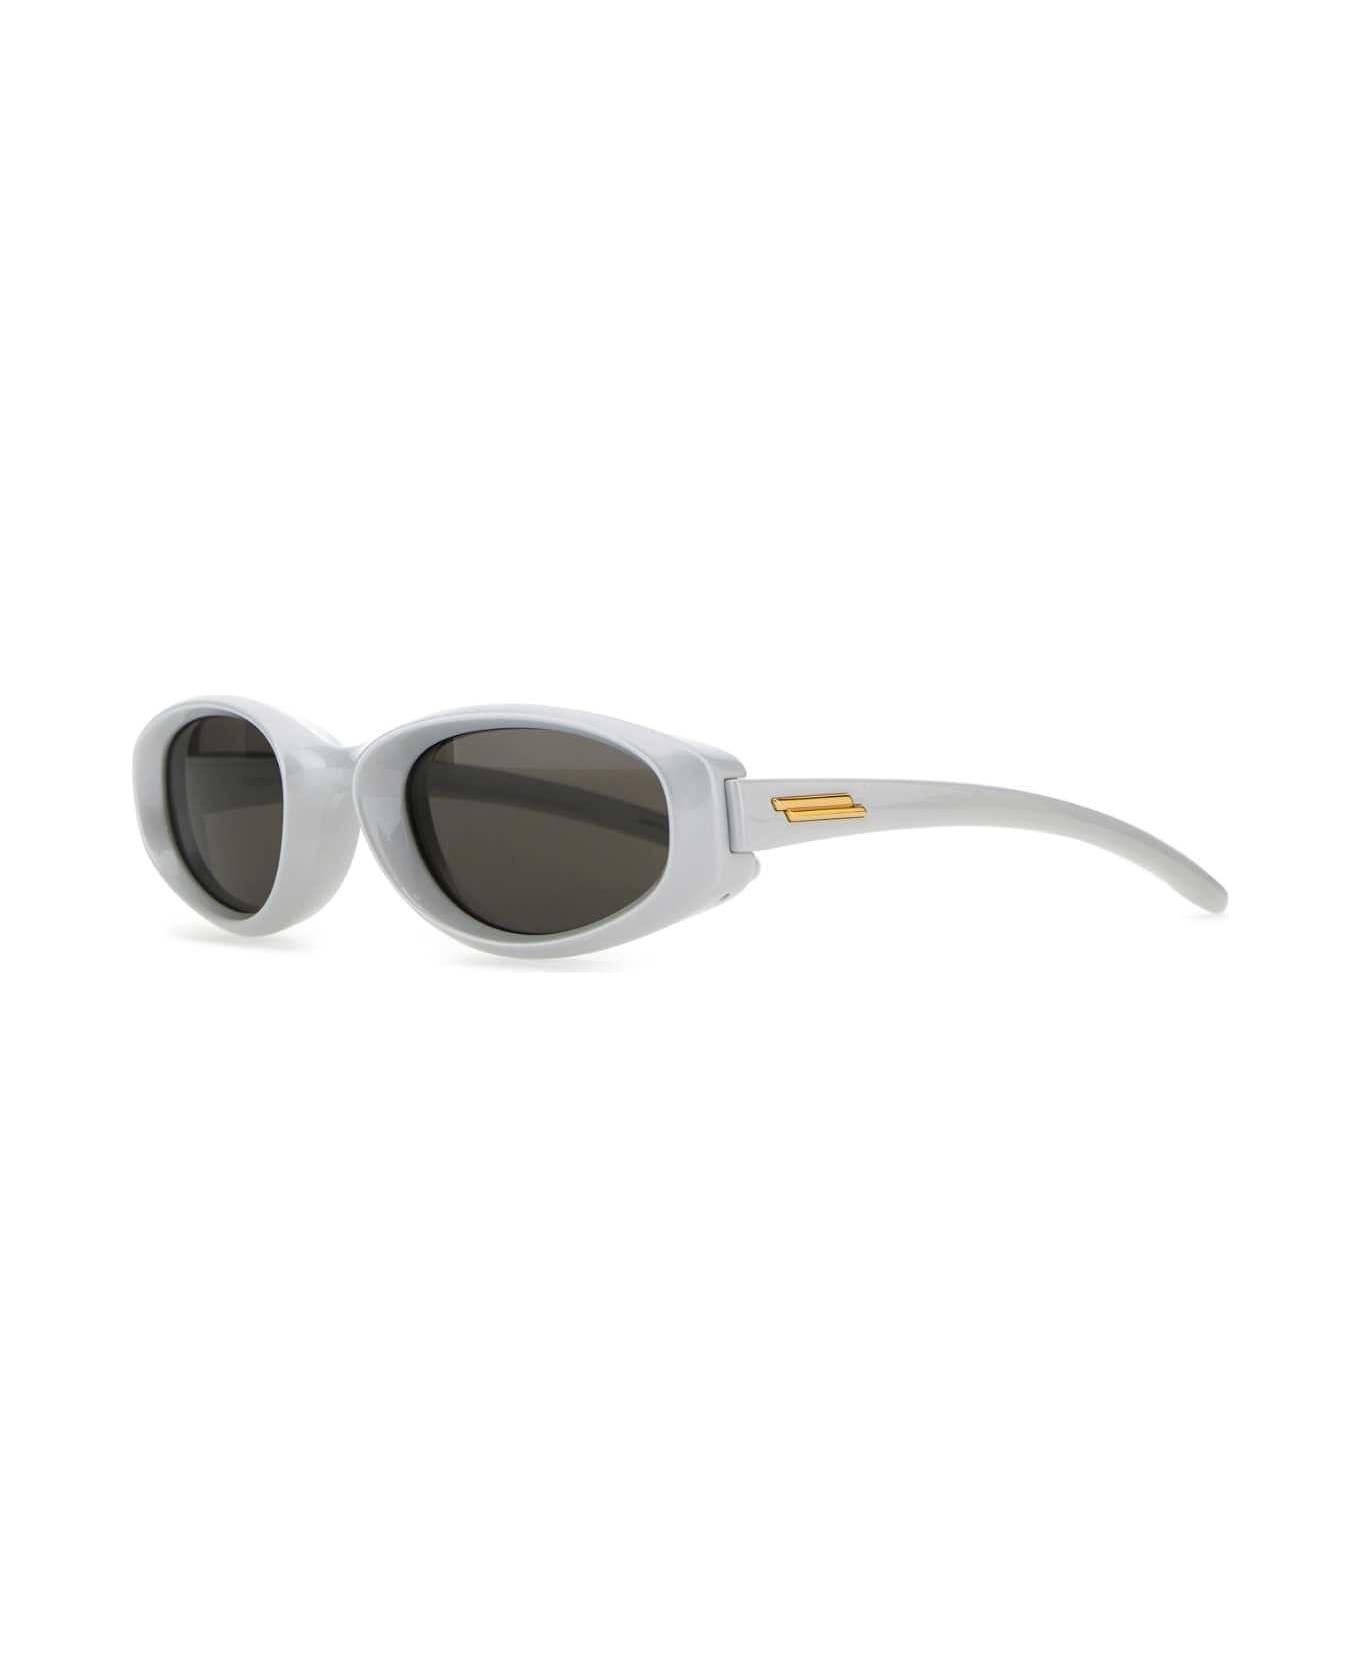 Bottega Veneta Light Grey Acetate Sunglasses - Multicolor